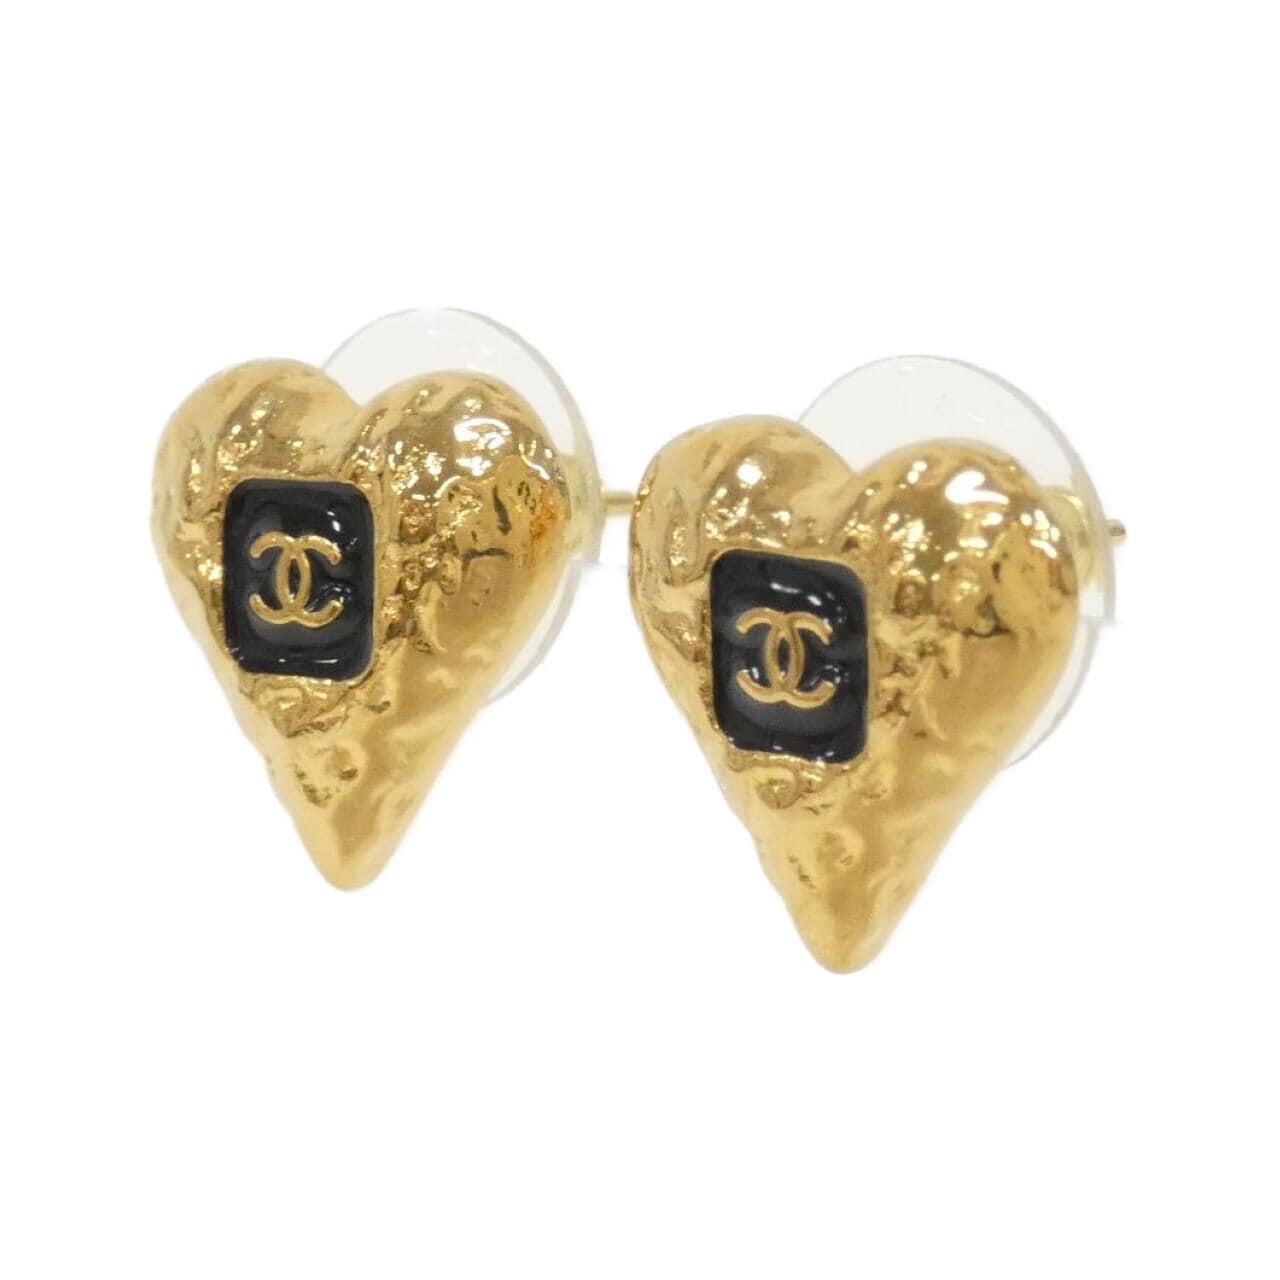 [Unused items] CHANEL ABC242 earrings